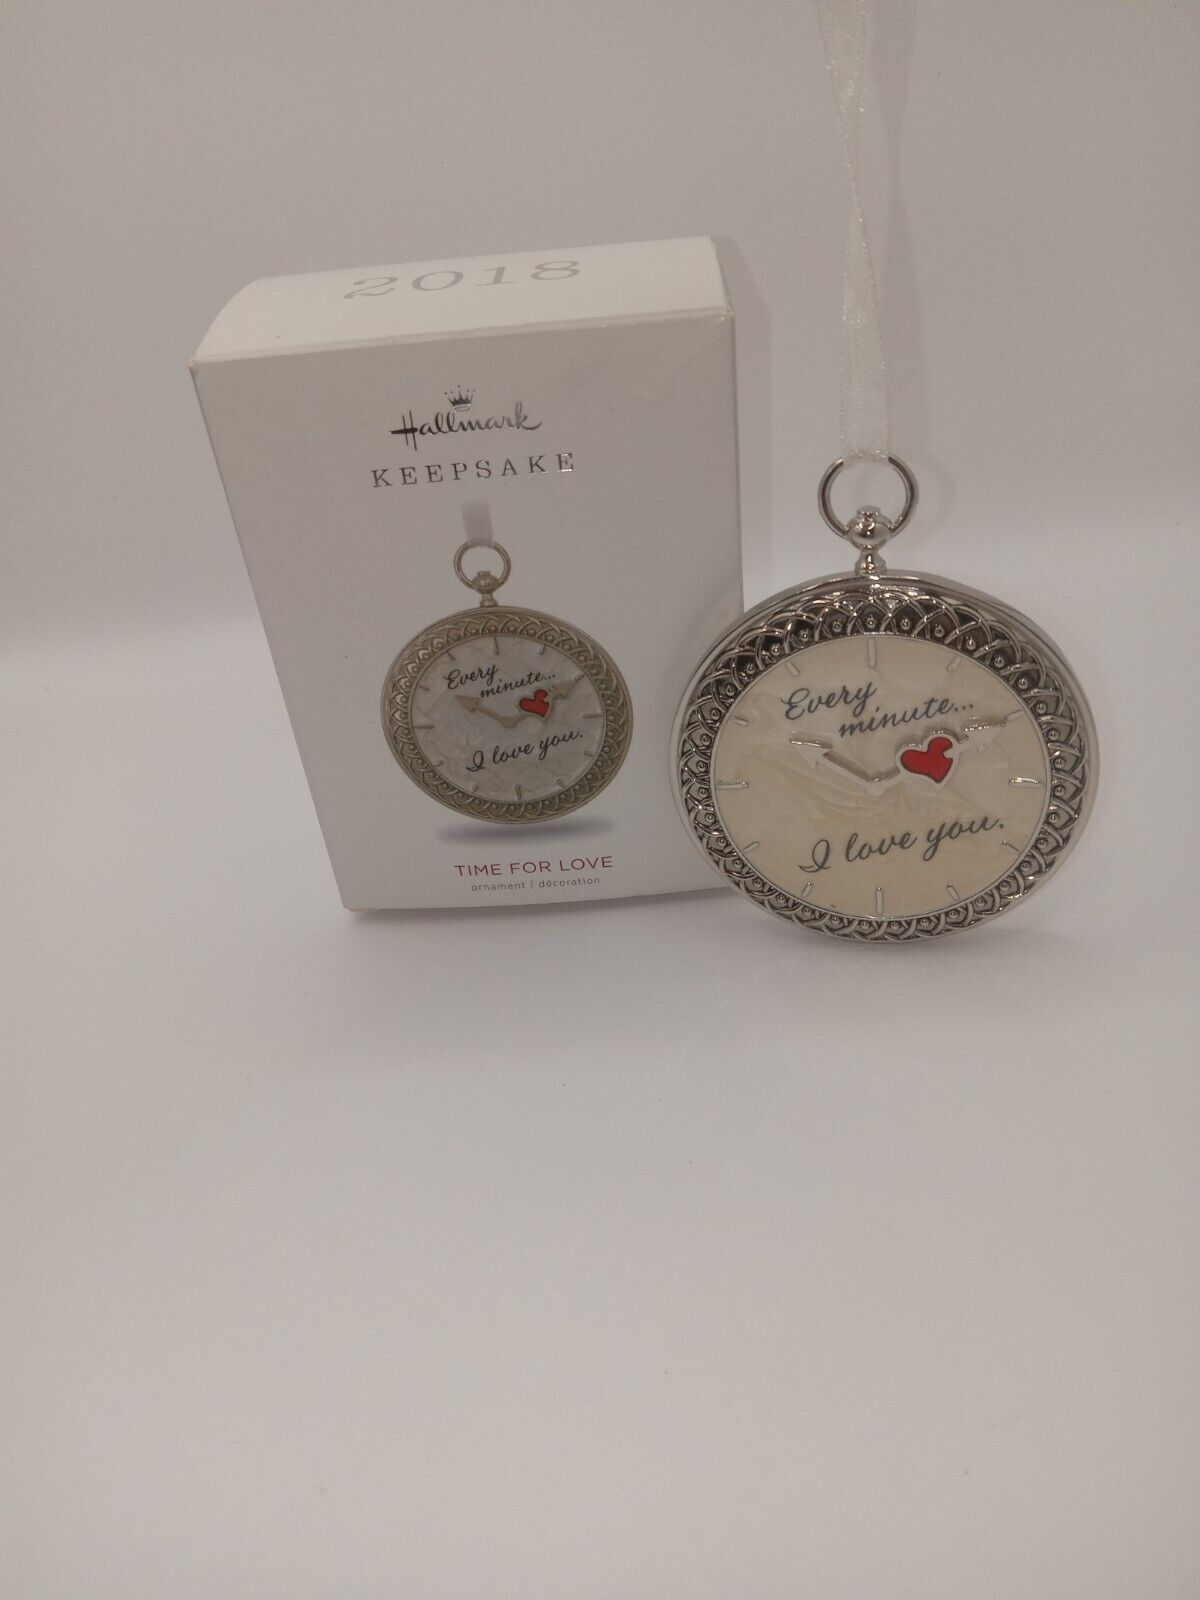 2018 Hallmark Keepsake Ornament TIME FOR LOVE Pocket Watch Open Box